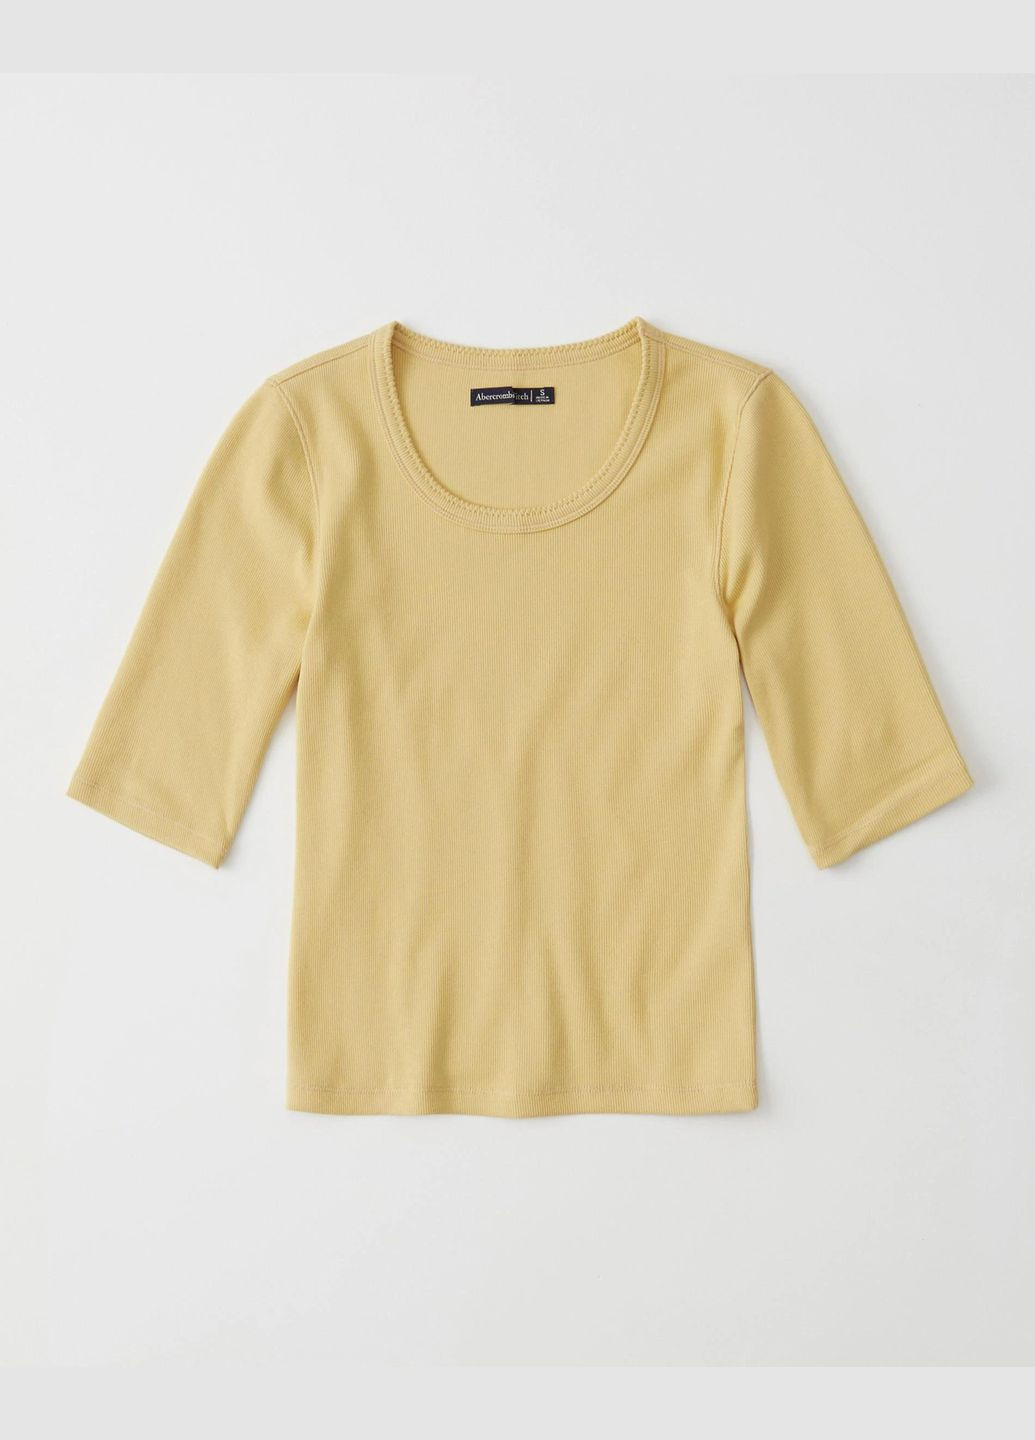 Желтая летняя футболка женская - футболка af5878w Abercrombie & Fitch